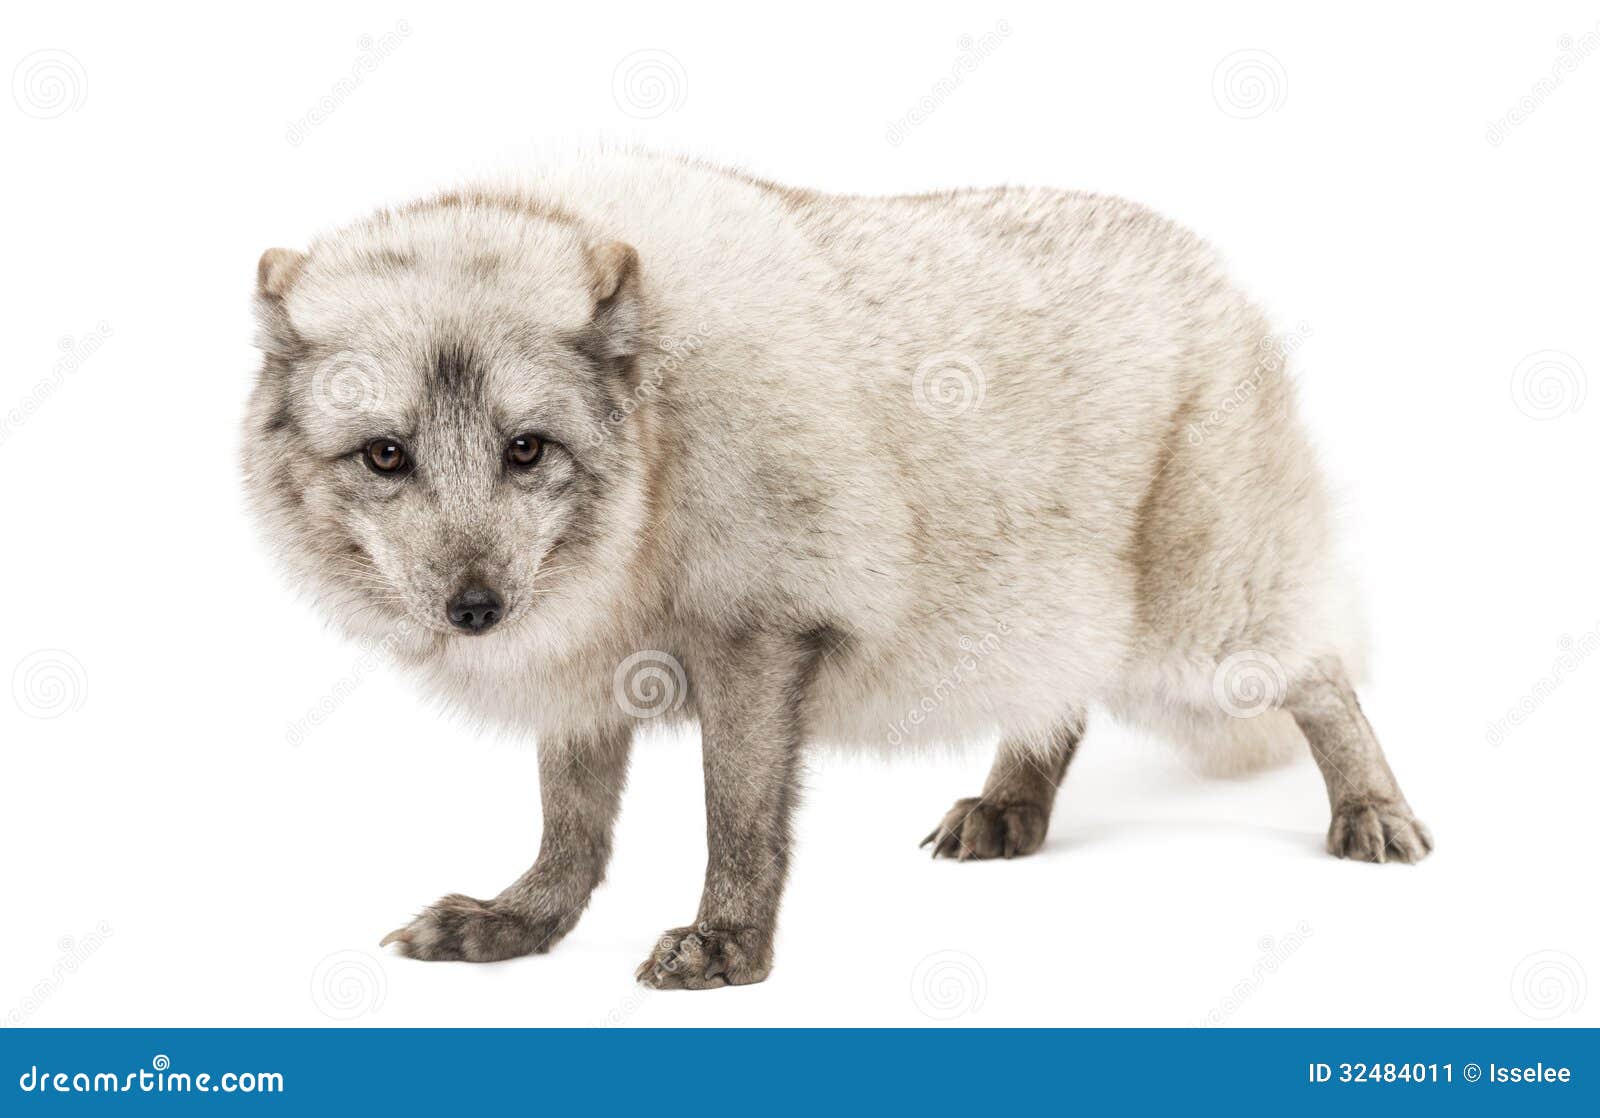 arctic fox, vulpes lagopus,  on white